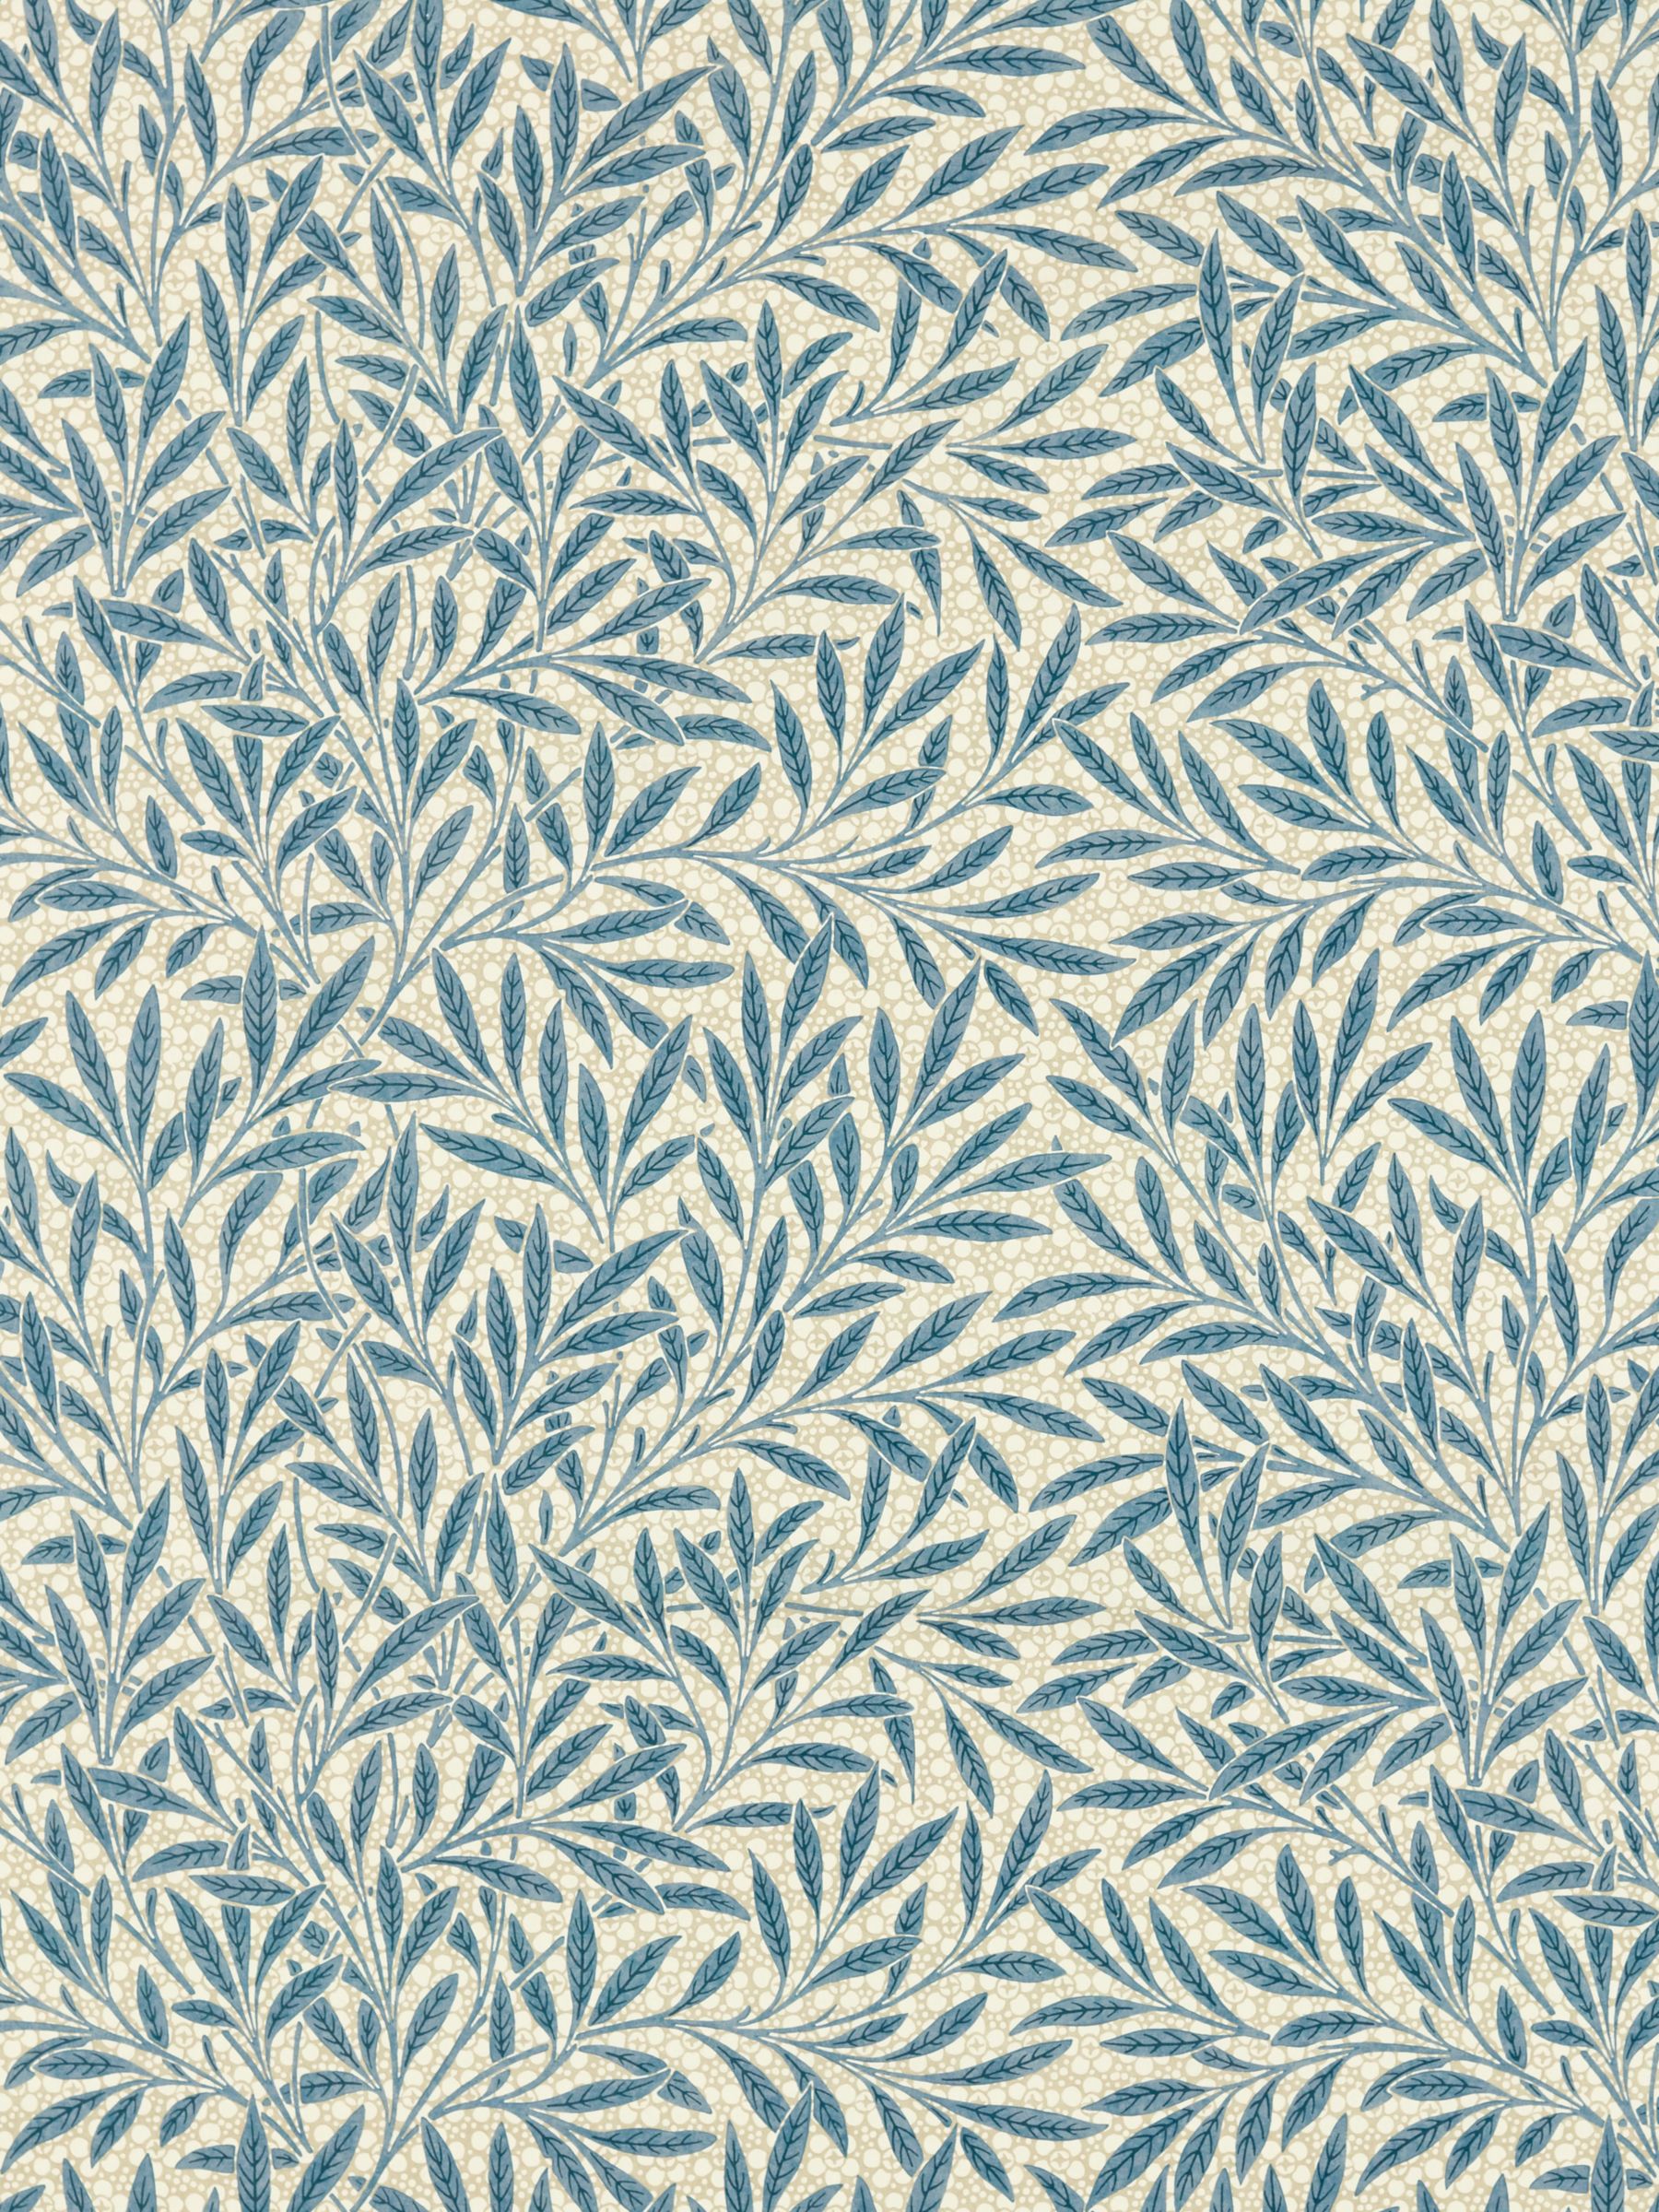 Morris & Co. Emery's Willow Furnishing Fabric, Woad Blue